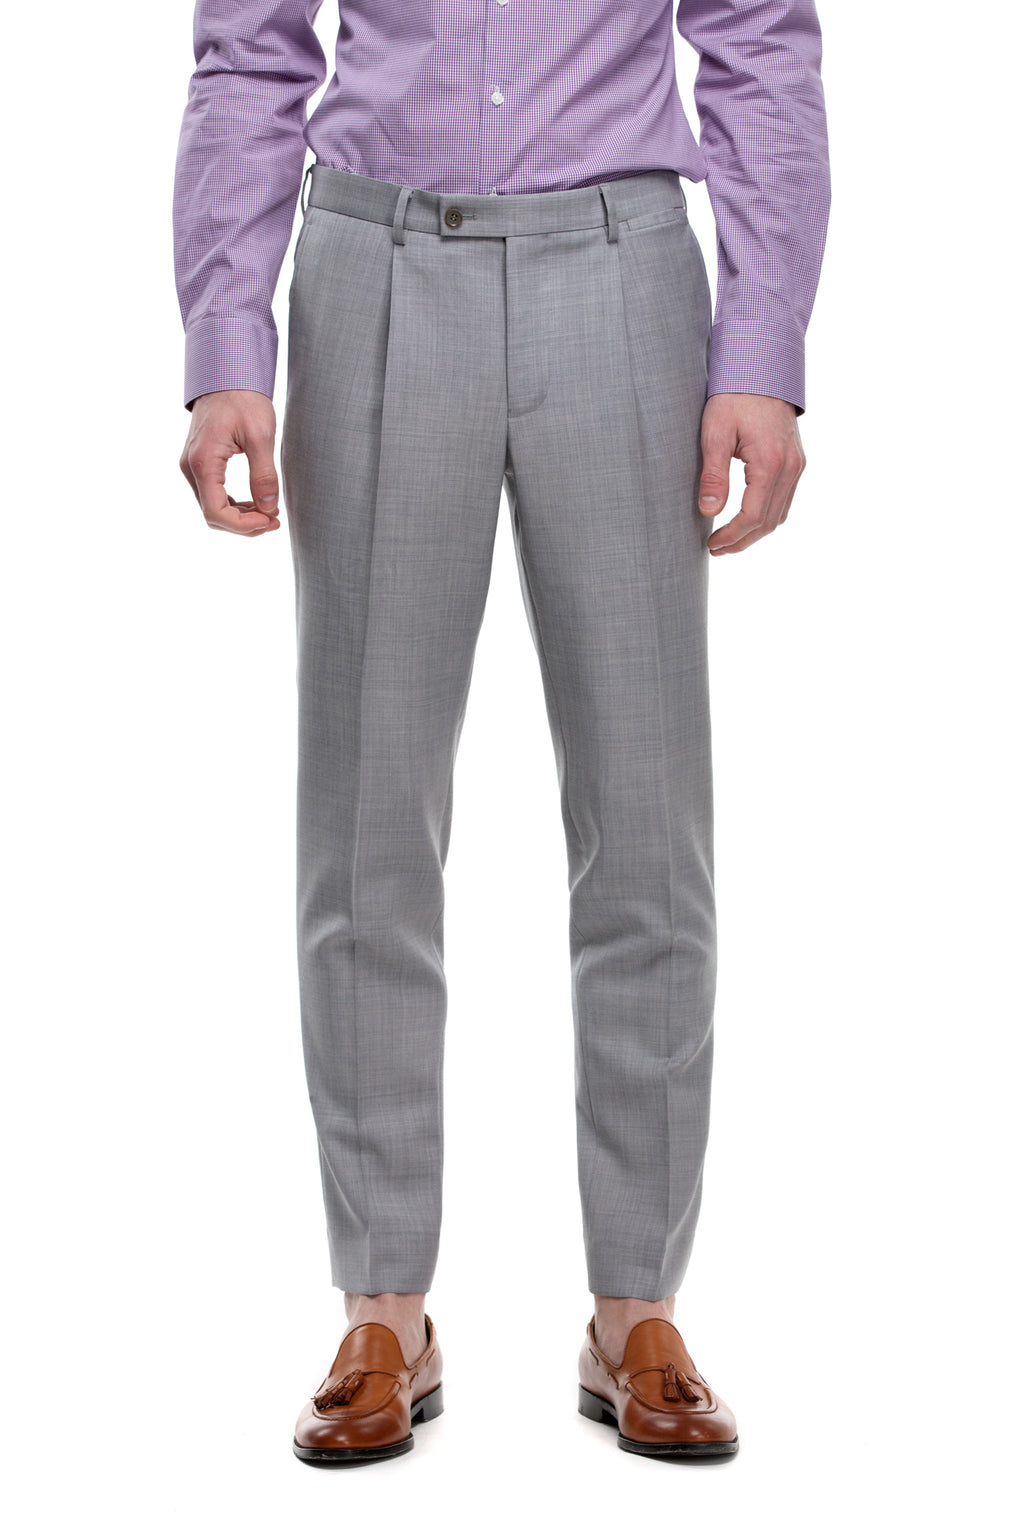 Custom Grey with Pleats Pants - ottotos